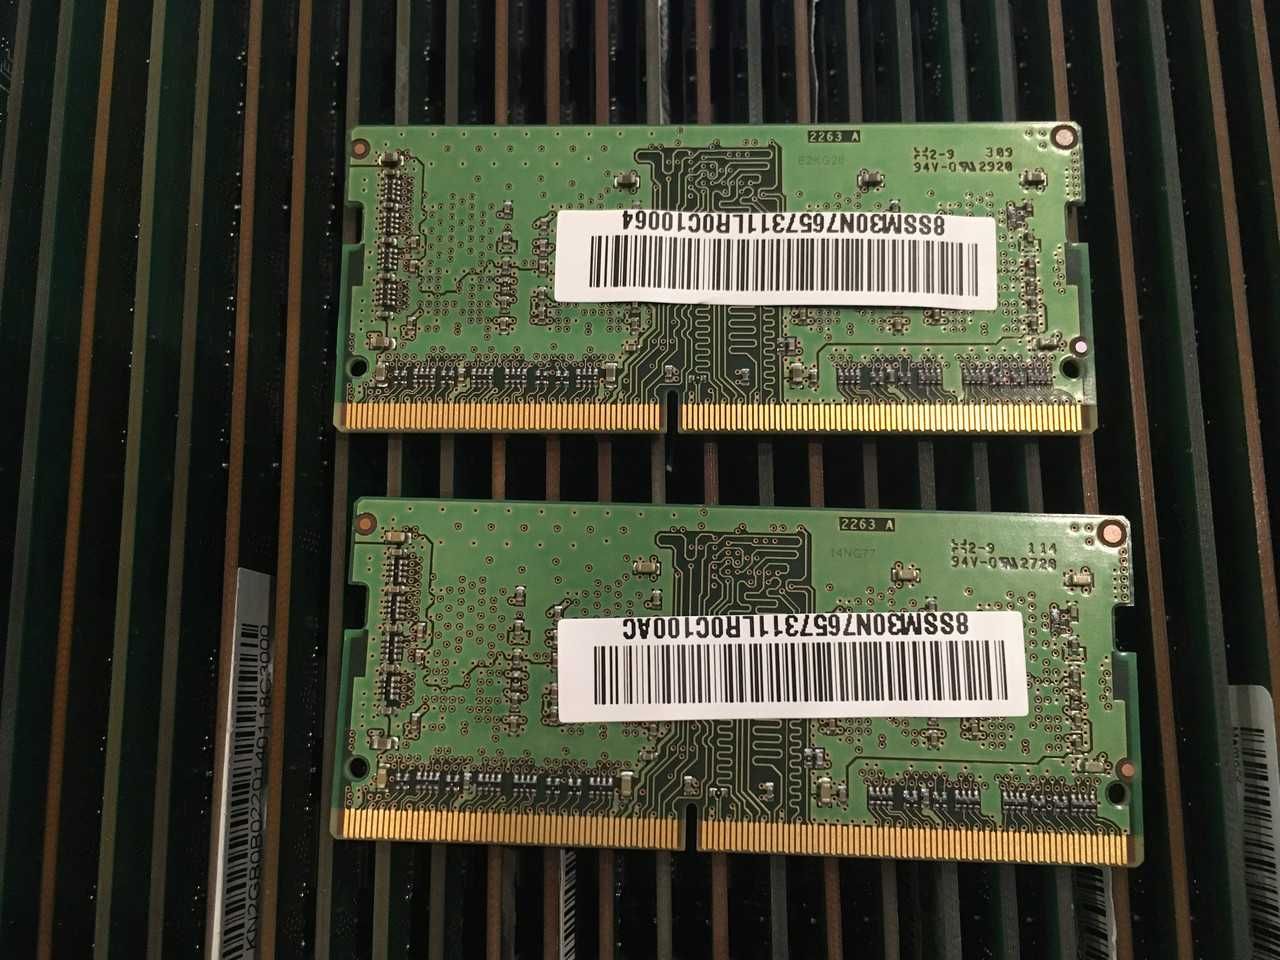 DDR4 3200AA Mhz 4 Gb Intel/AMD SO-DIMM (ноут)